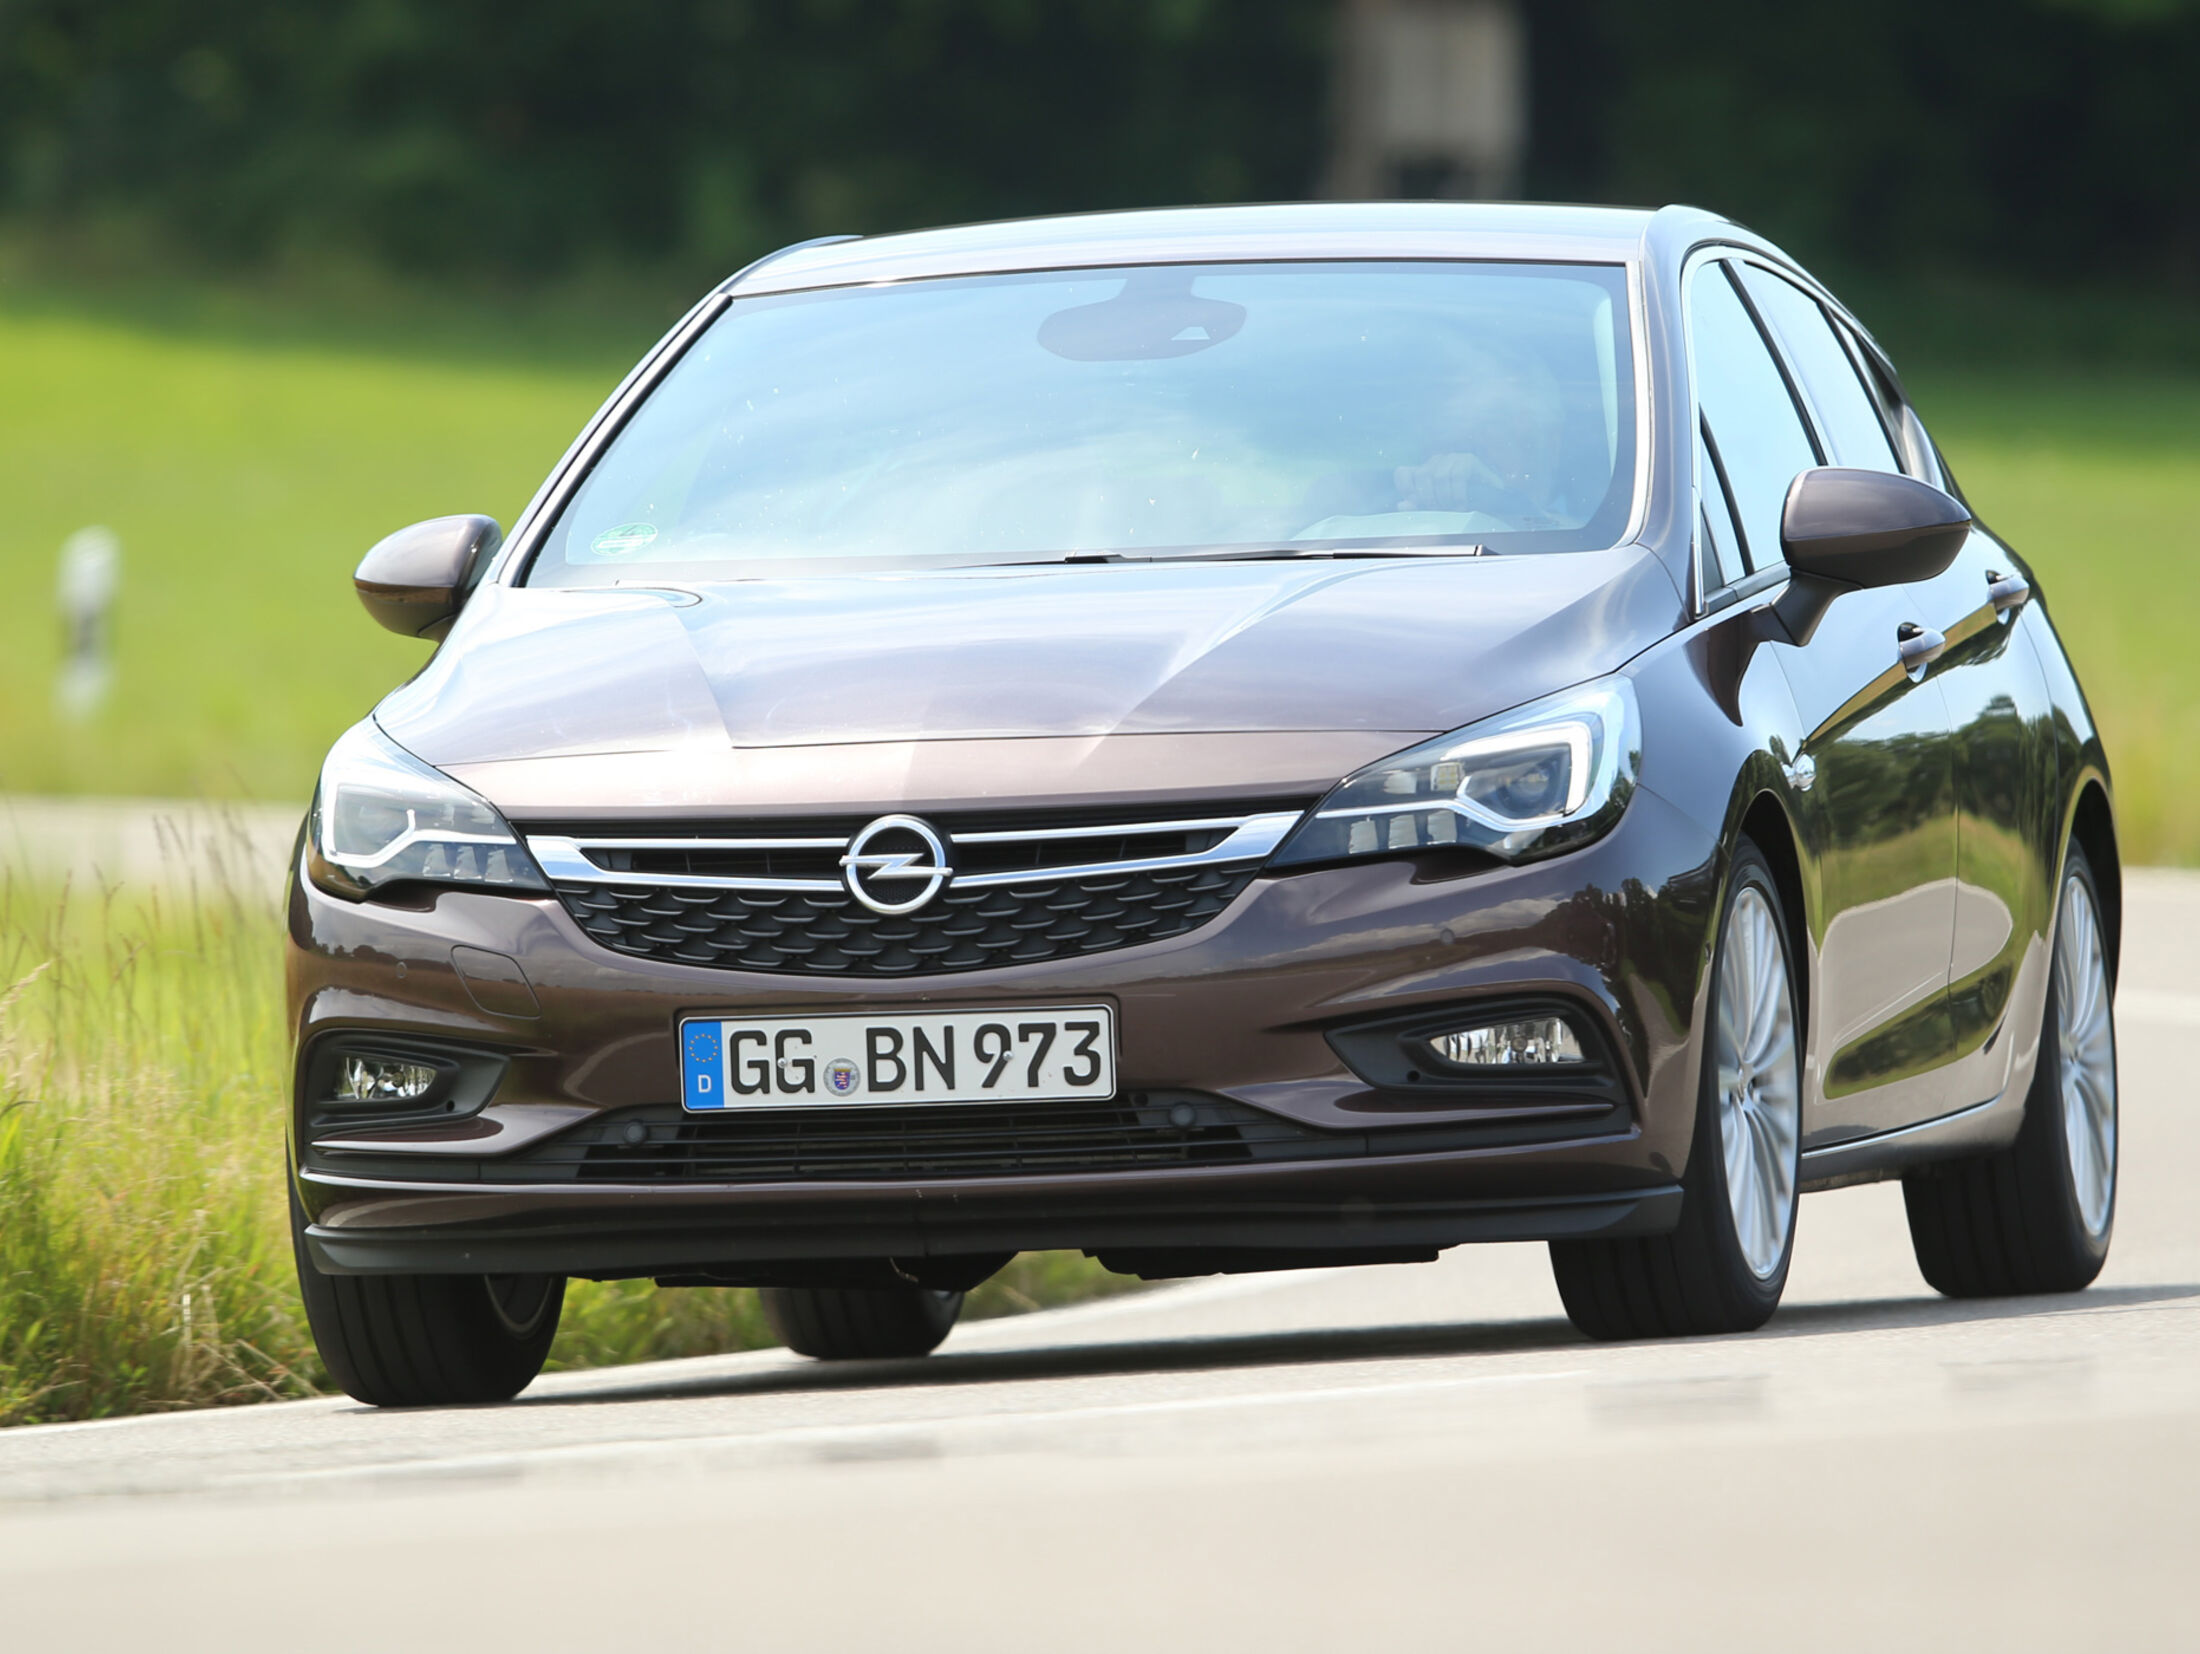 https://imgr1.auto-motor-und-sport.de/Opel-Astra-jsonLd4x3-2c191eb2-1000855.jpg